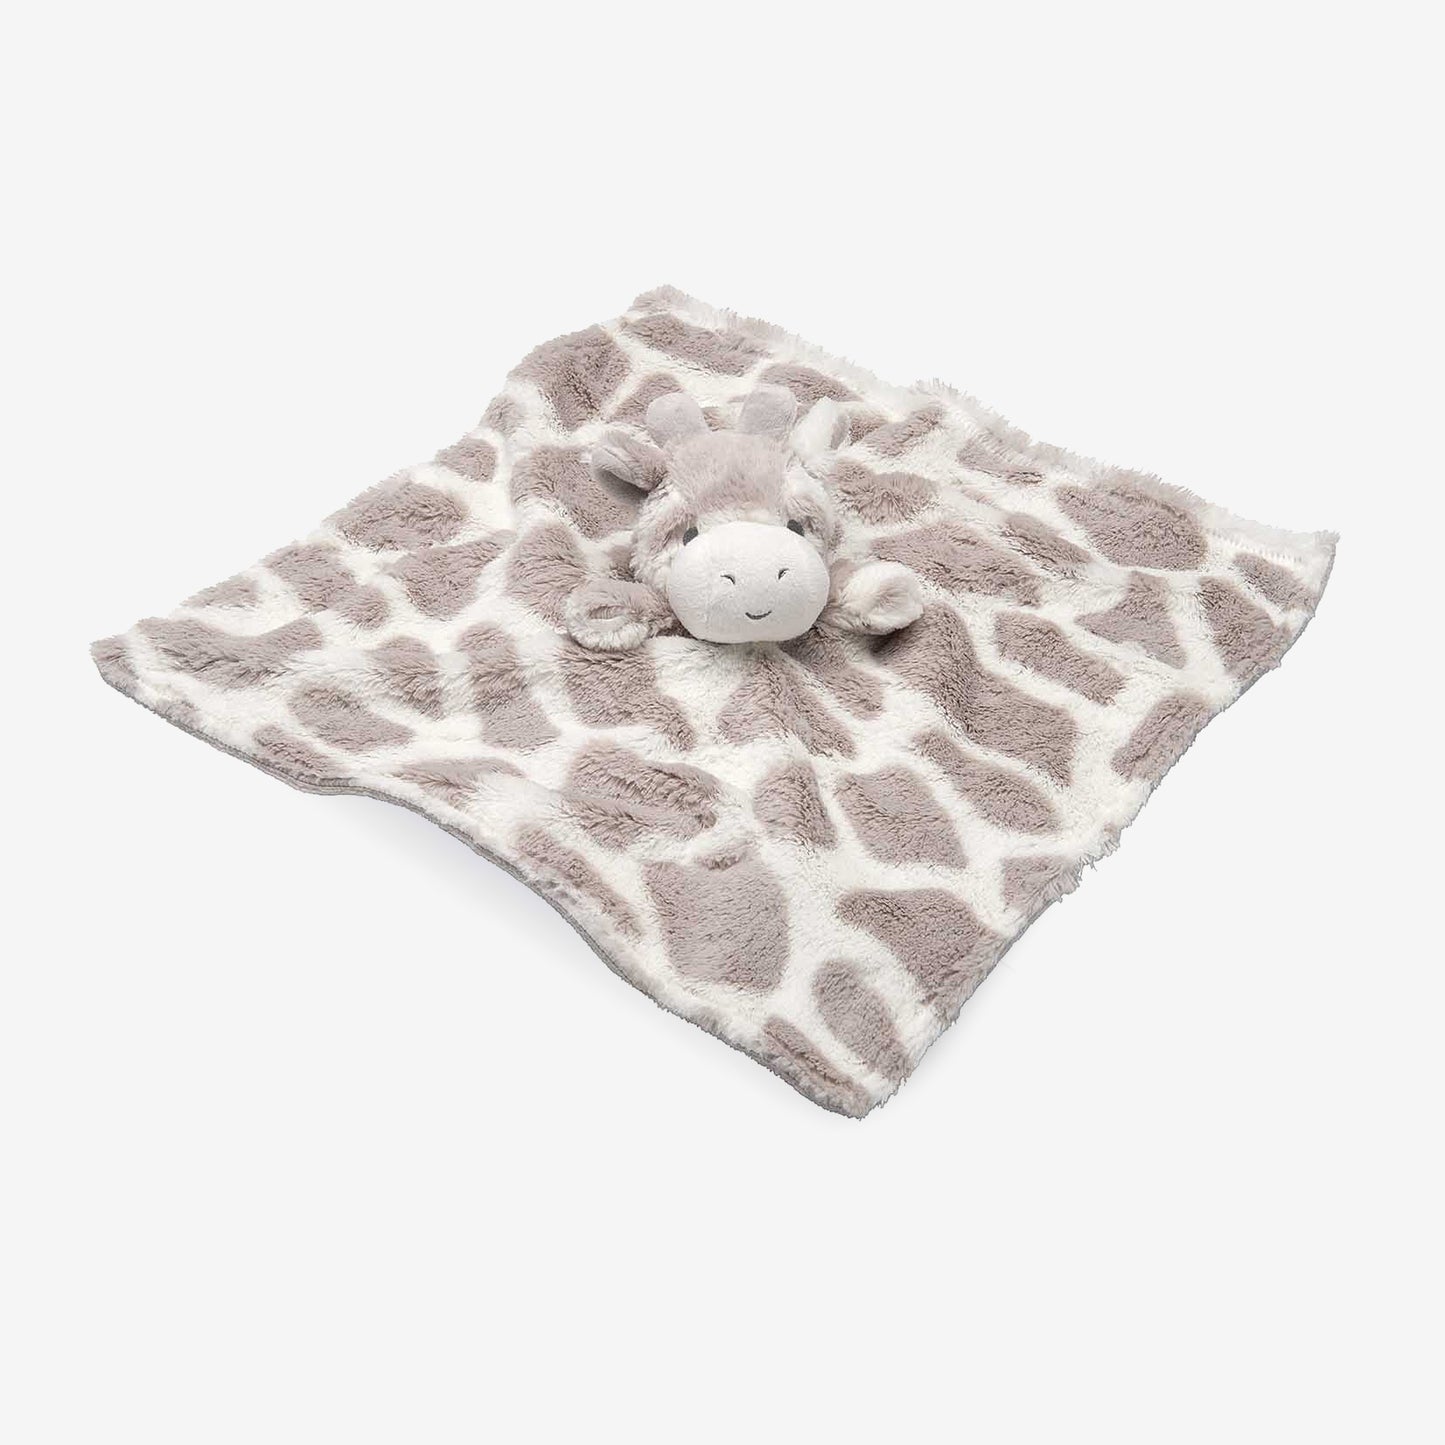 Giraffe Baby Security Blanket